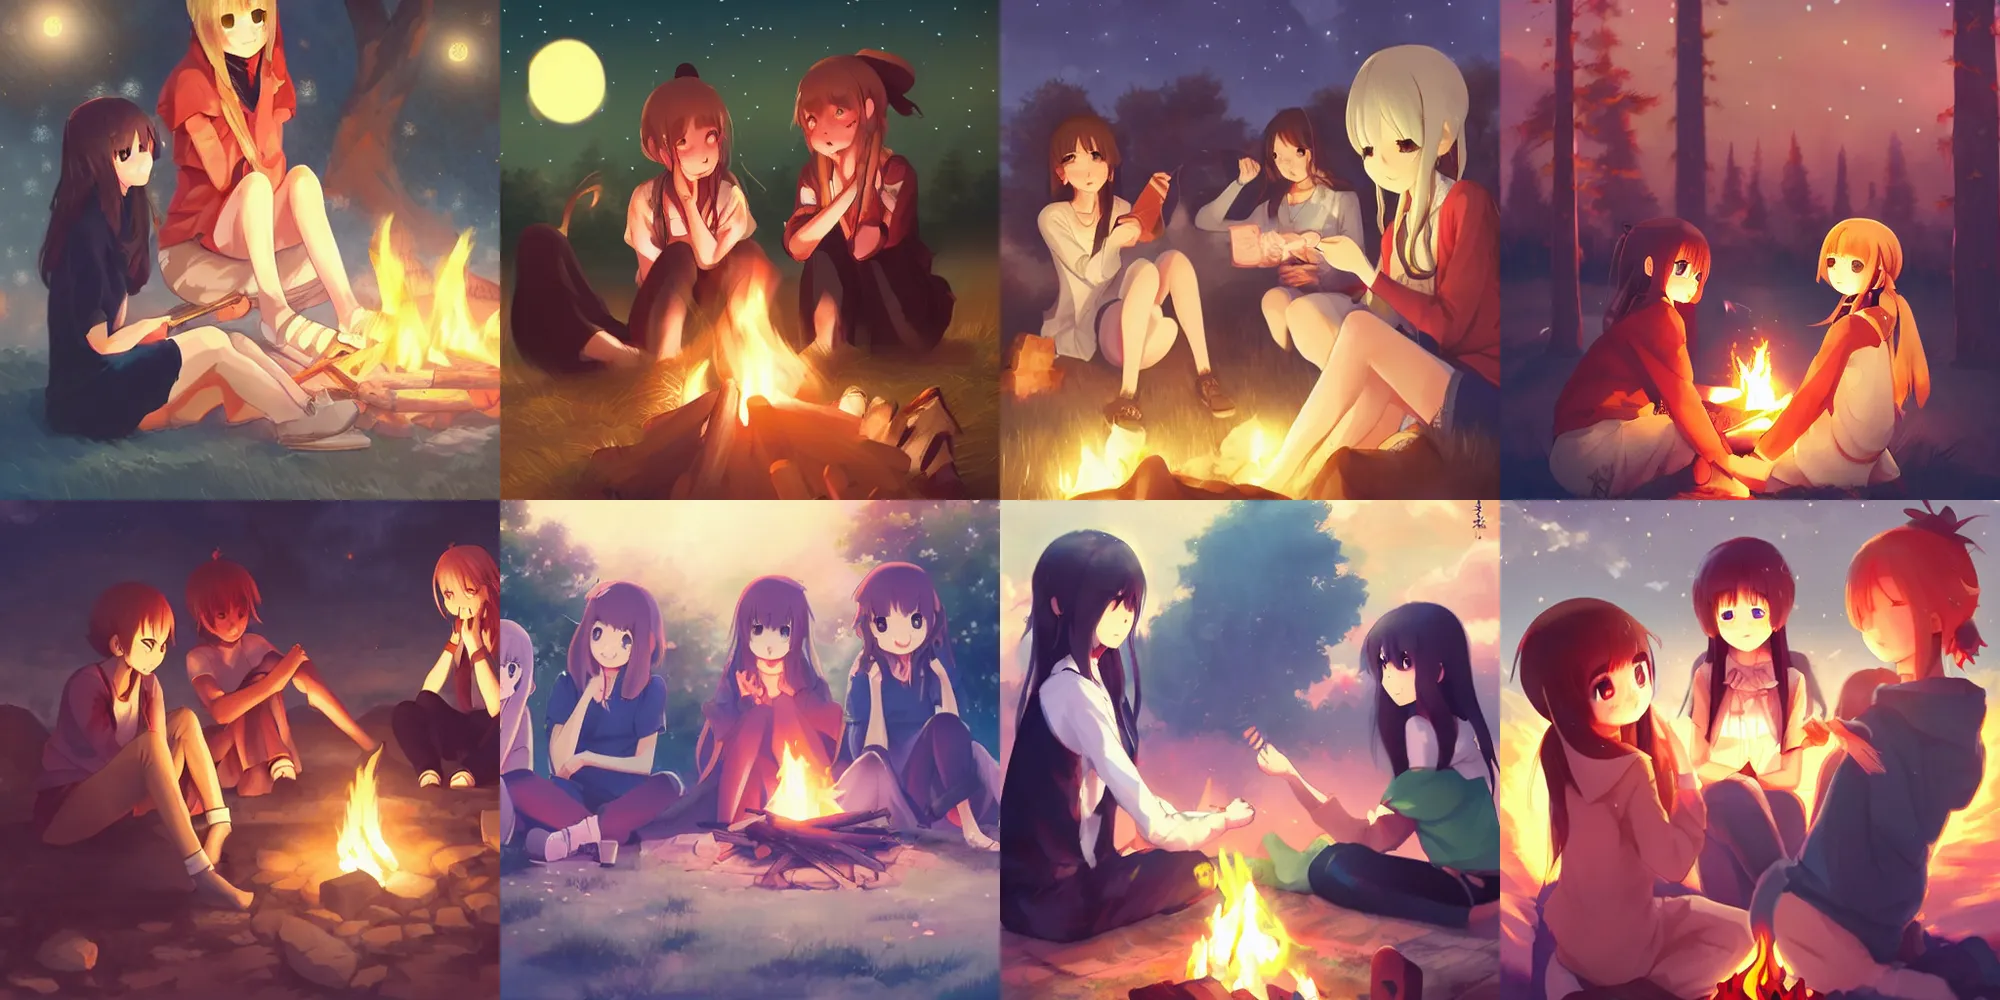 Prompt: very beautiful cute girls sitting around campfire at night, anime, trending on artstation, pixiv, makoto shinkai, manga cover